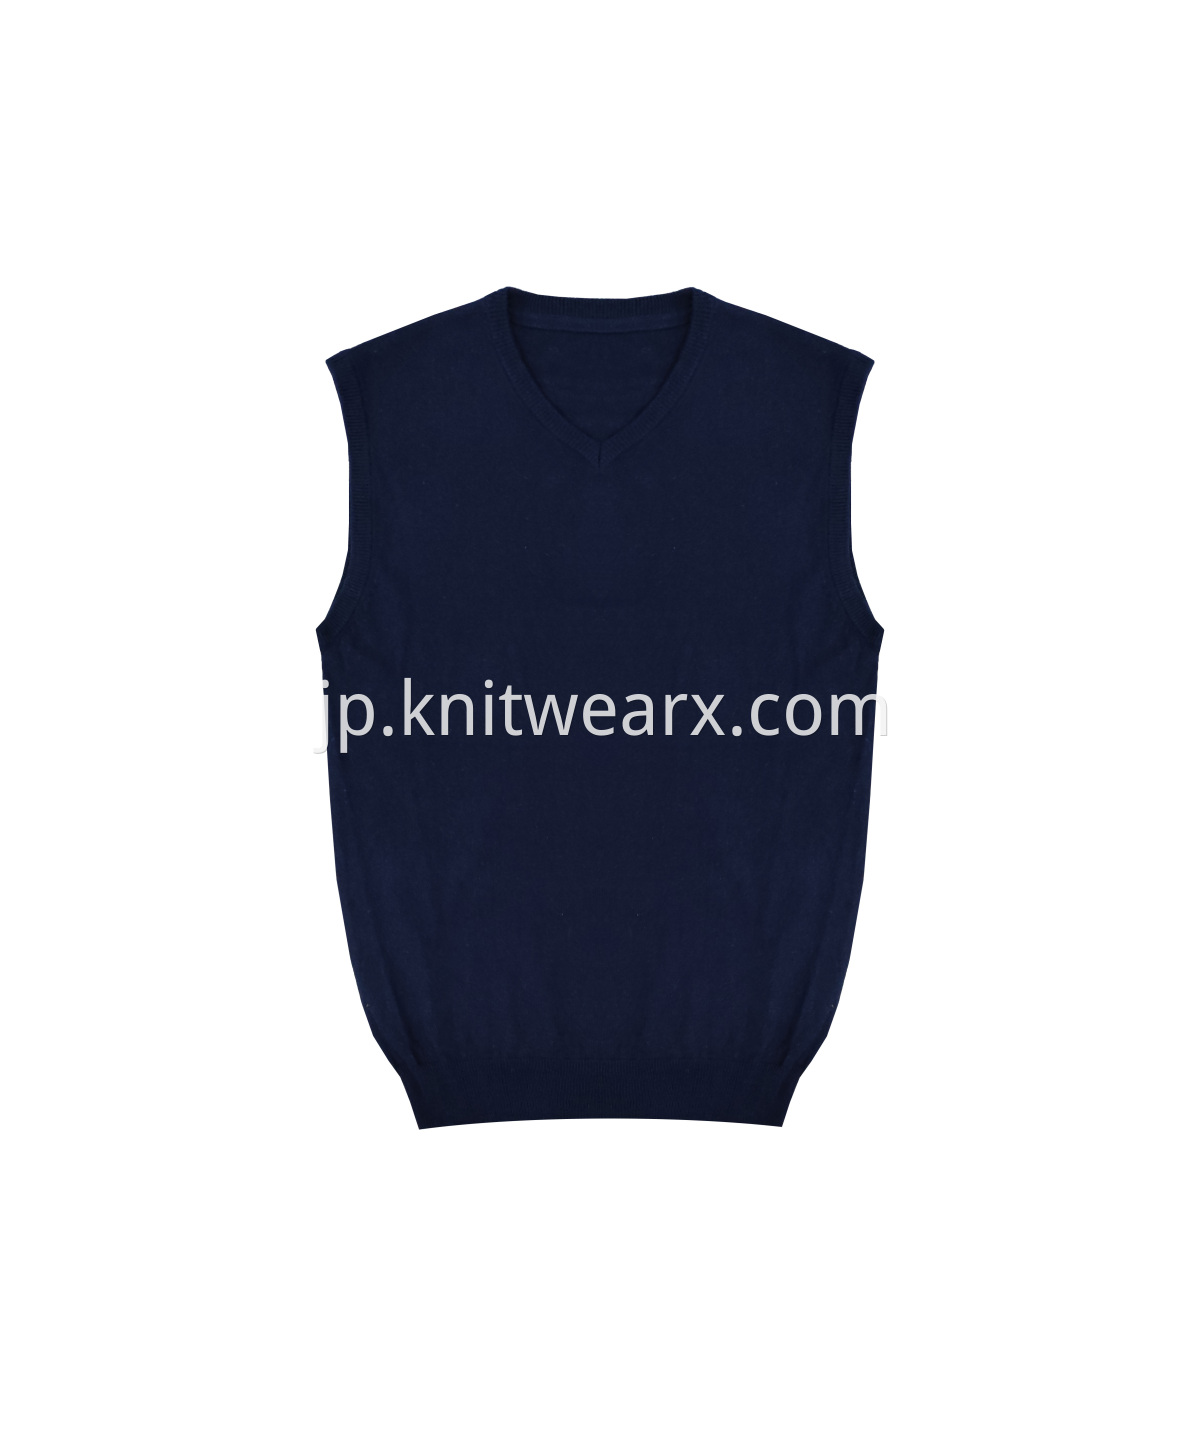 Men's Knitted Warm Vest V-neck Sweater